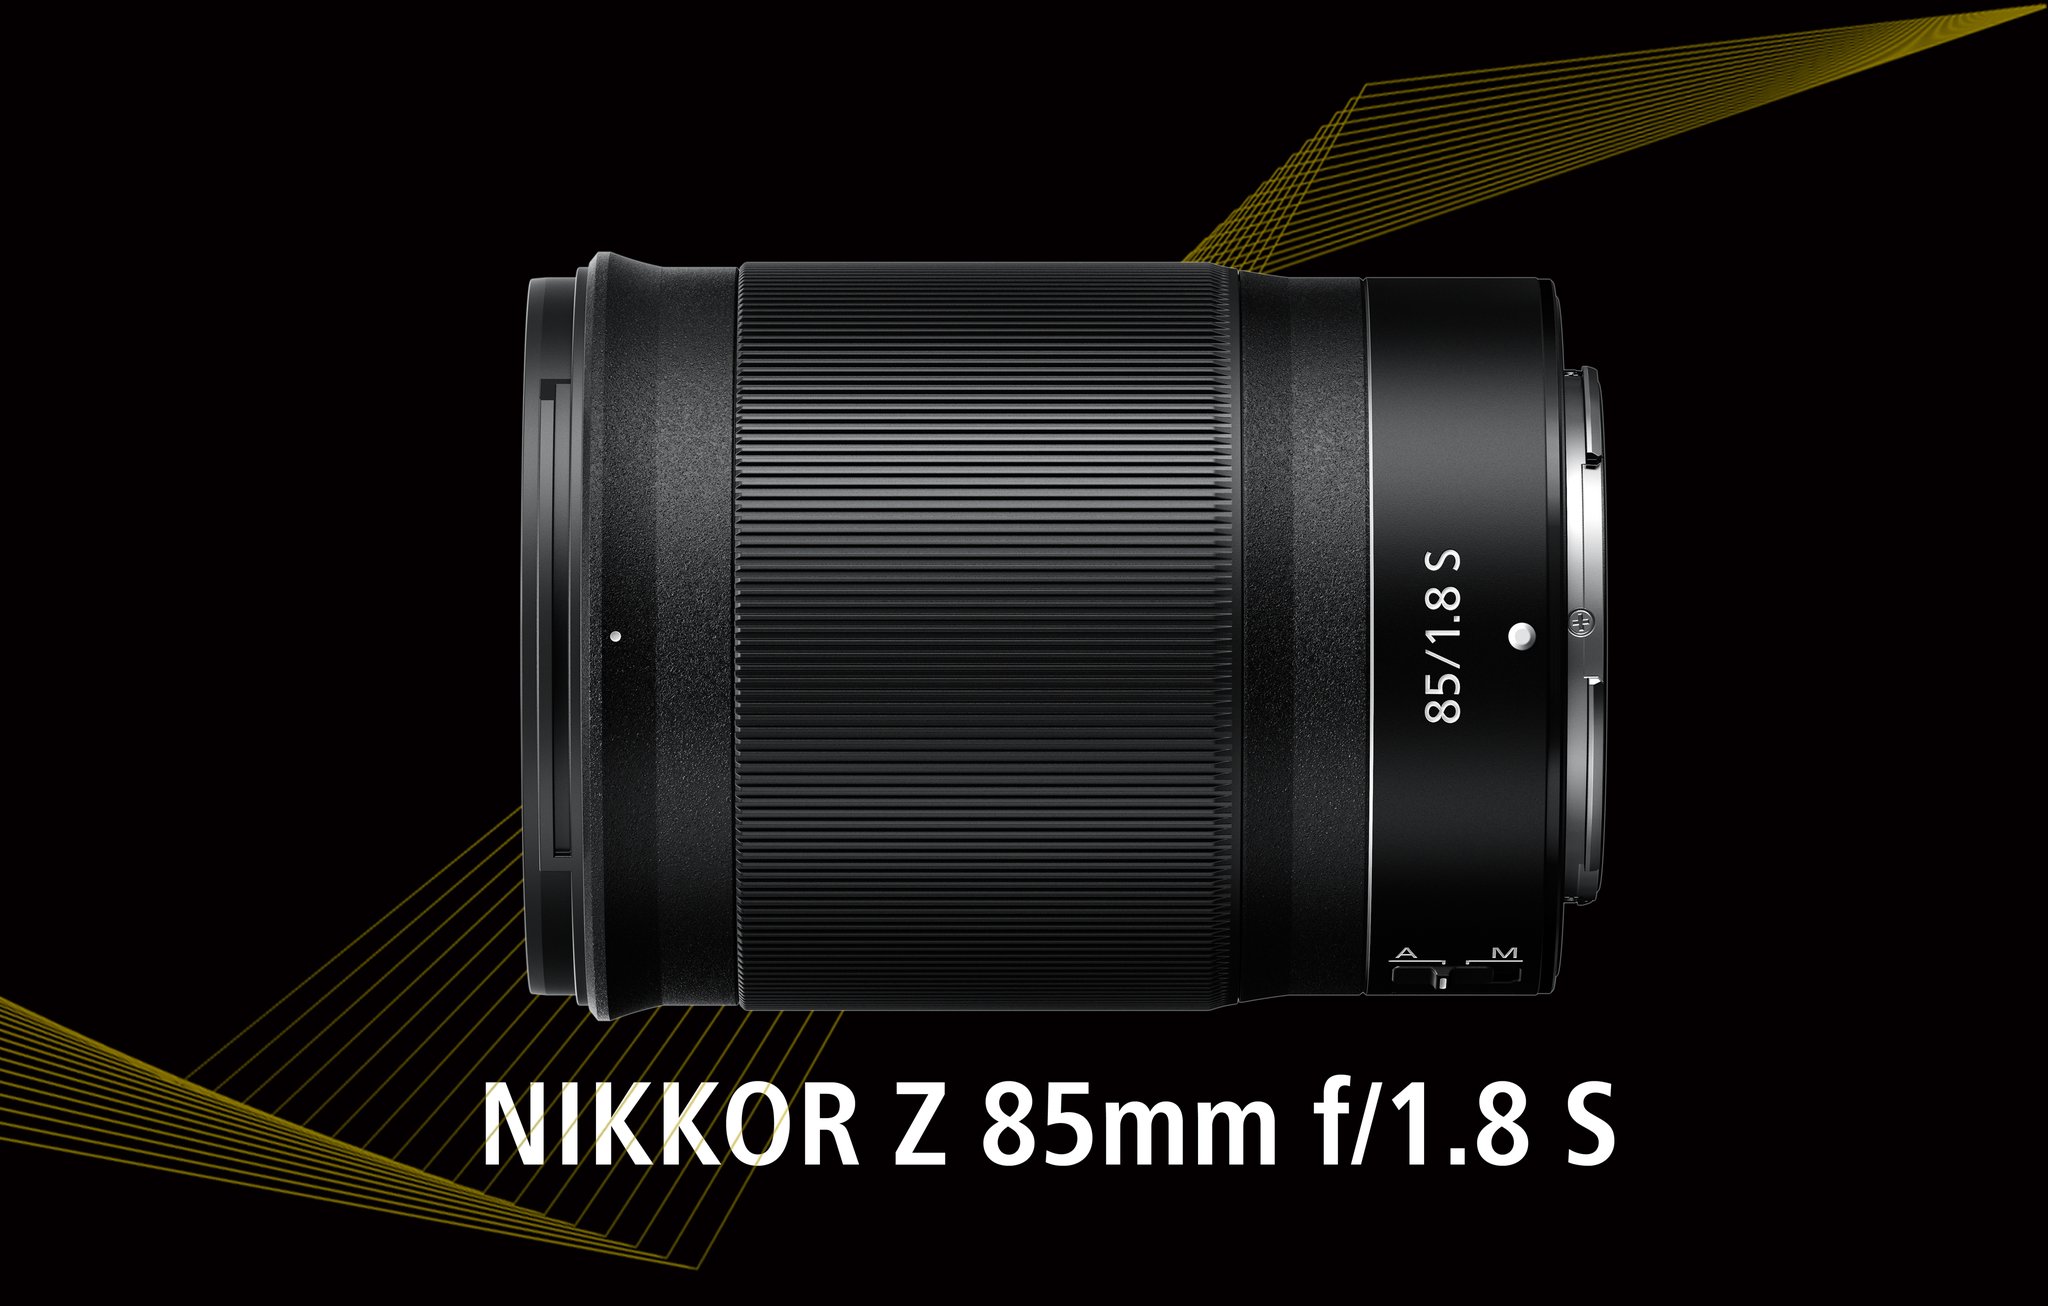 First Nikkor Z 85mm f/1.8 S hands-on video - Nikon Rumors